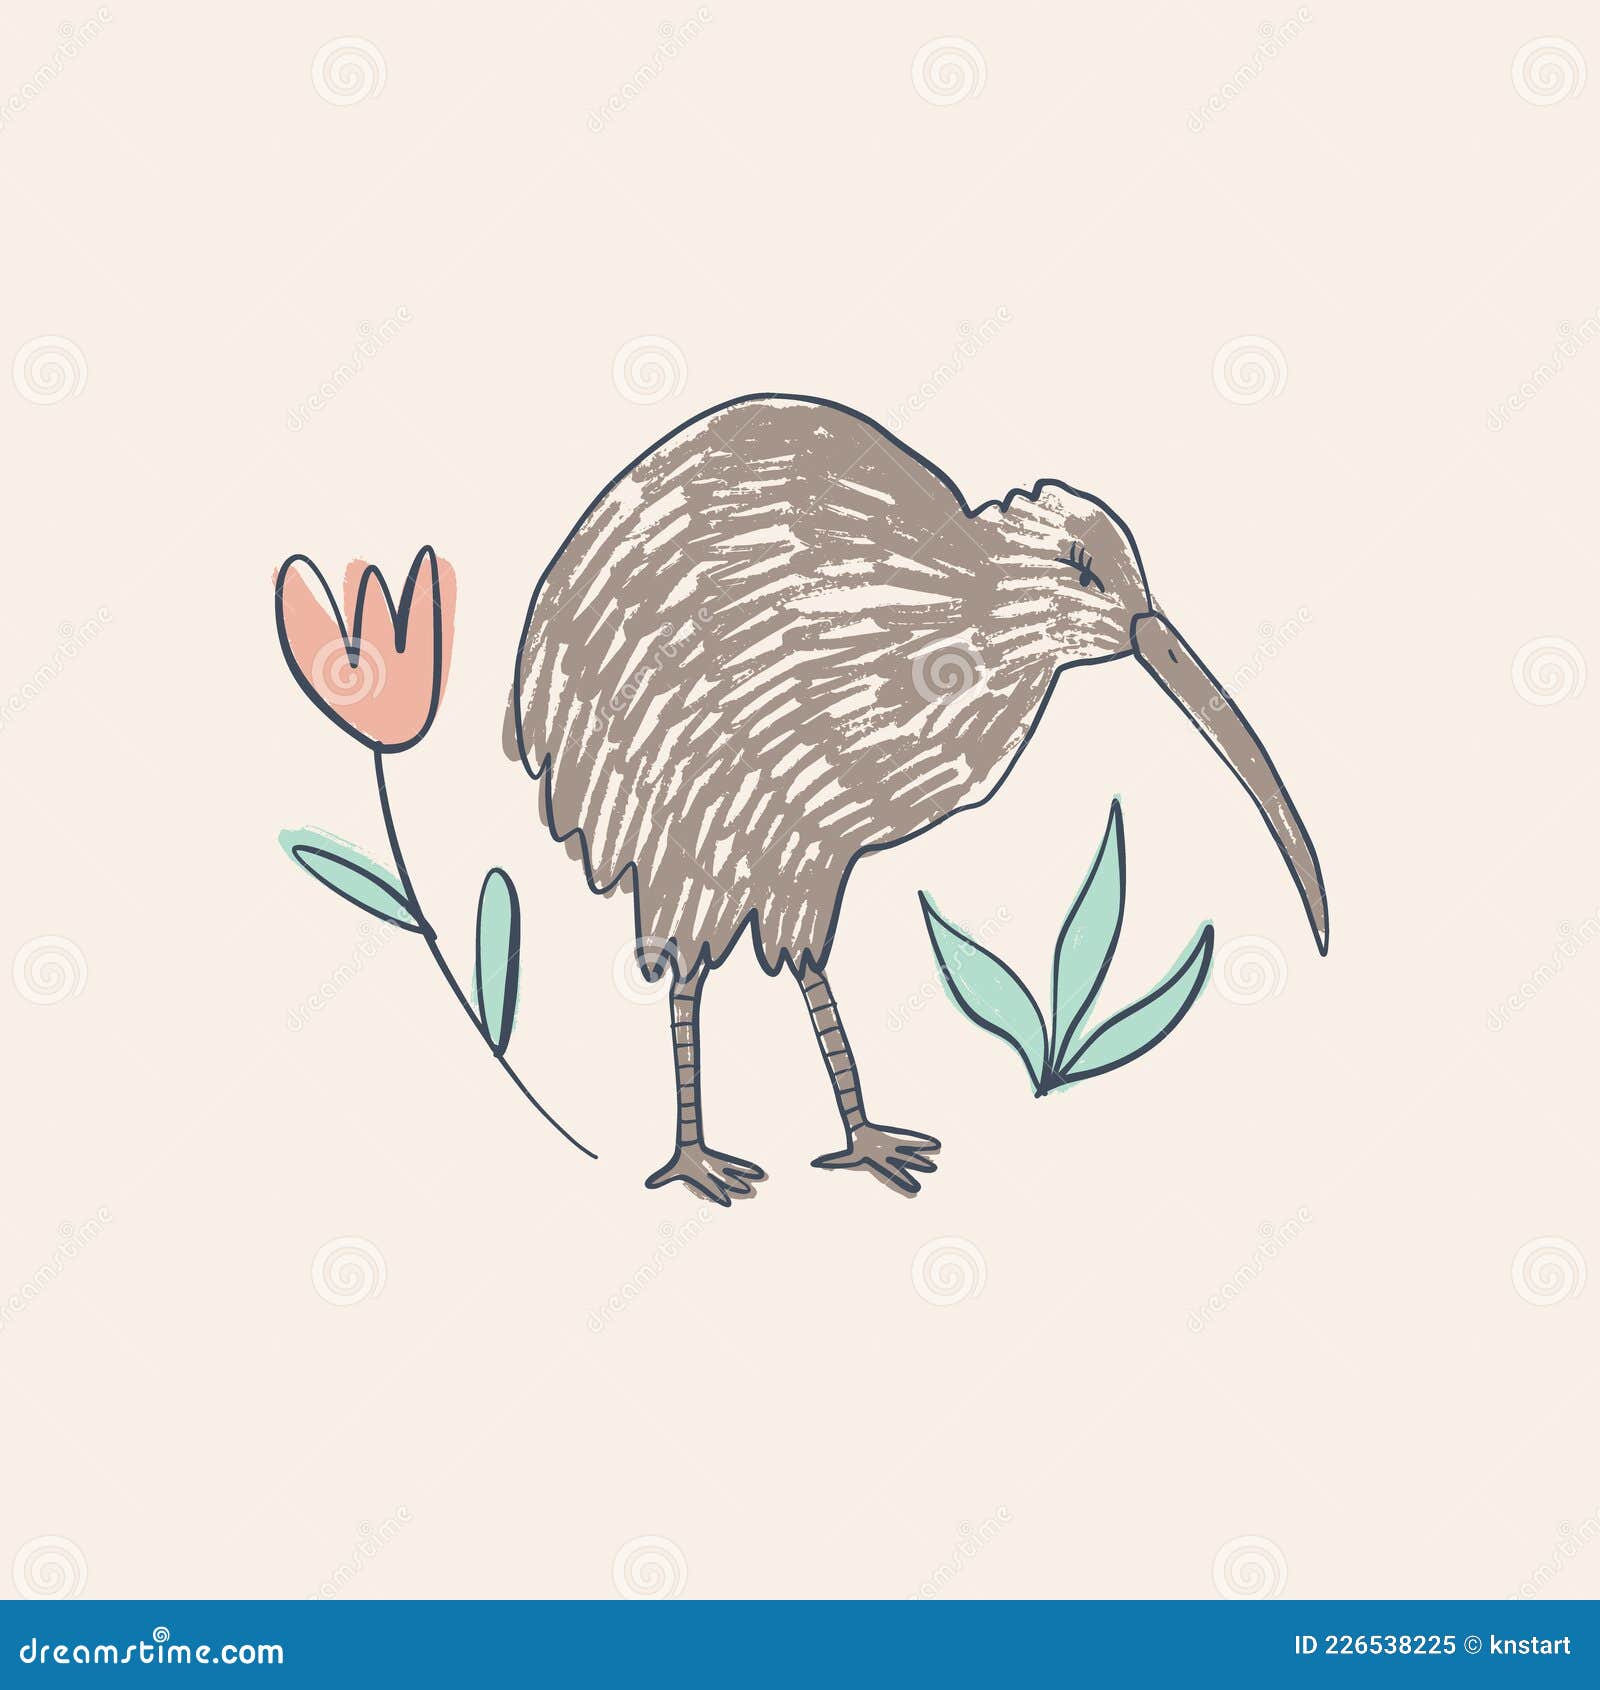 Cute Kiwi Bird Animal Doodle Kids Style Drawing. Stock Vector - Illustration of animal, doodle: